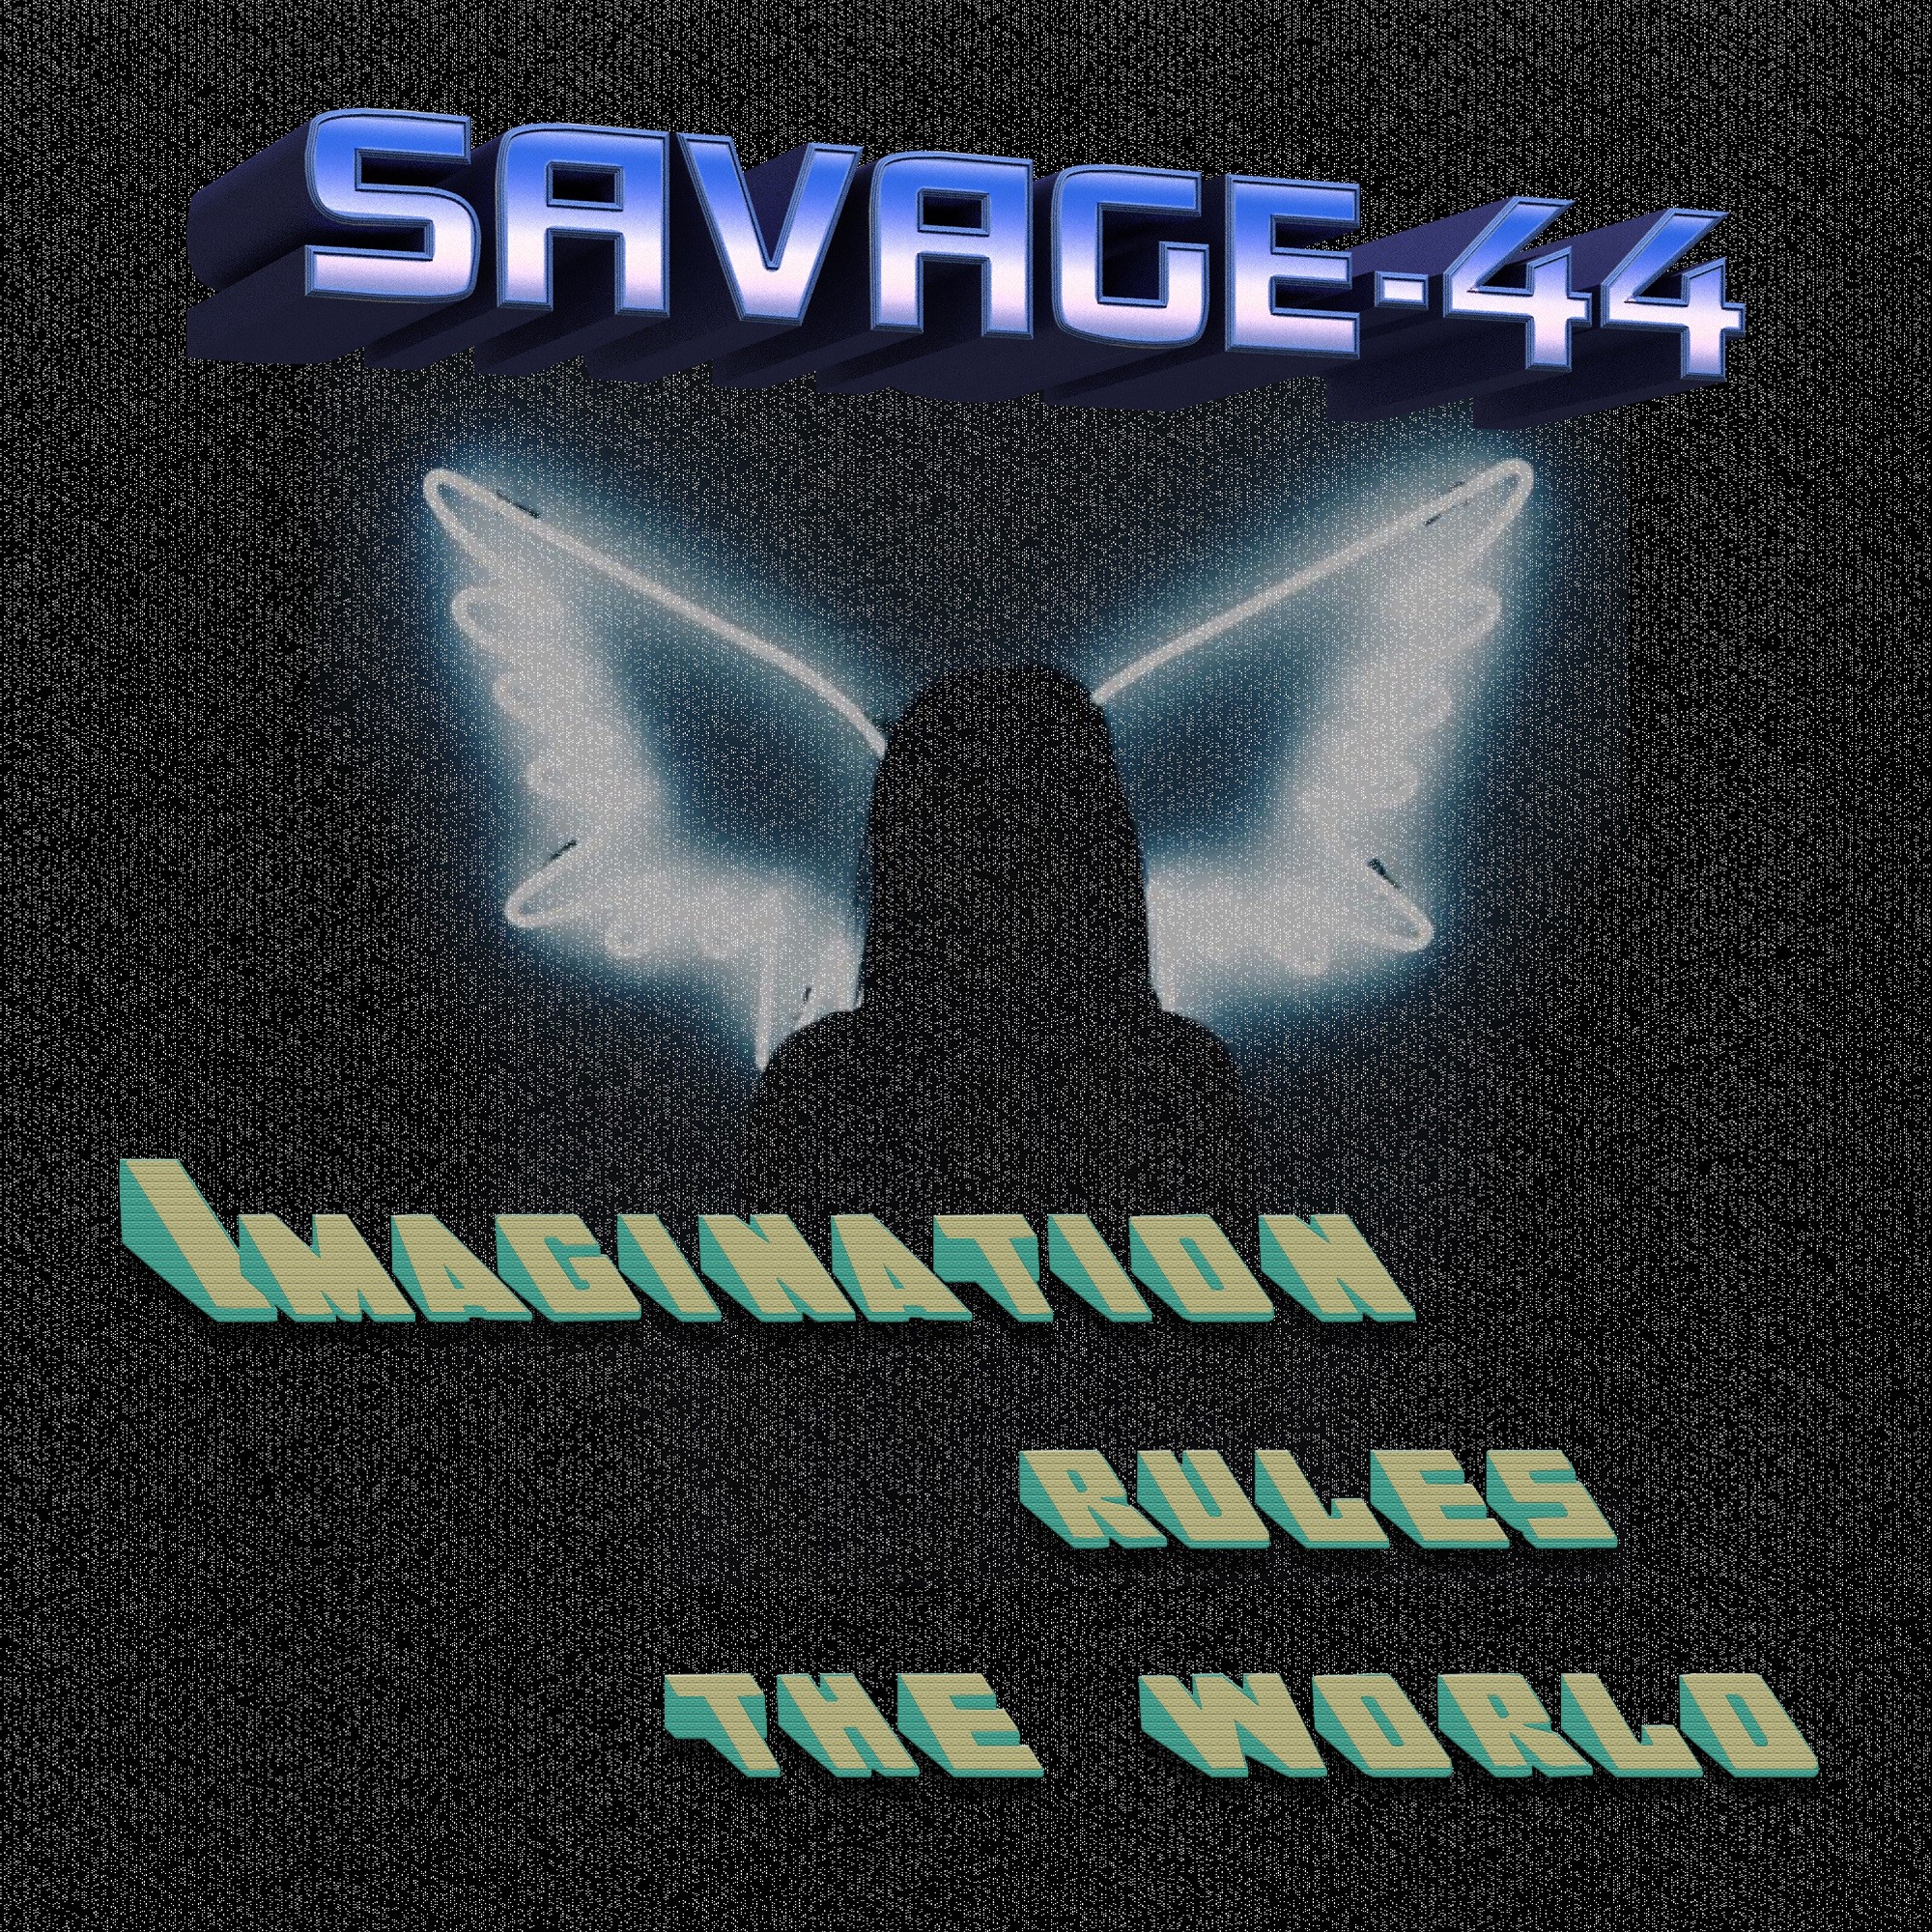 Savage 44 the music ring new. Savage 44. Саваж 44 Евроданс. Morozoff Savage-44. Savage 44 imagination Rules the World.